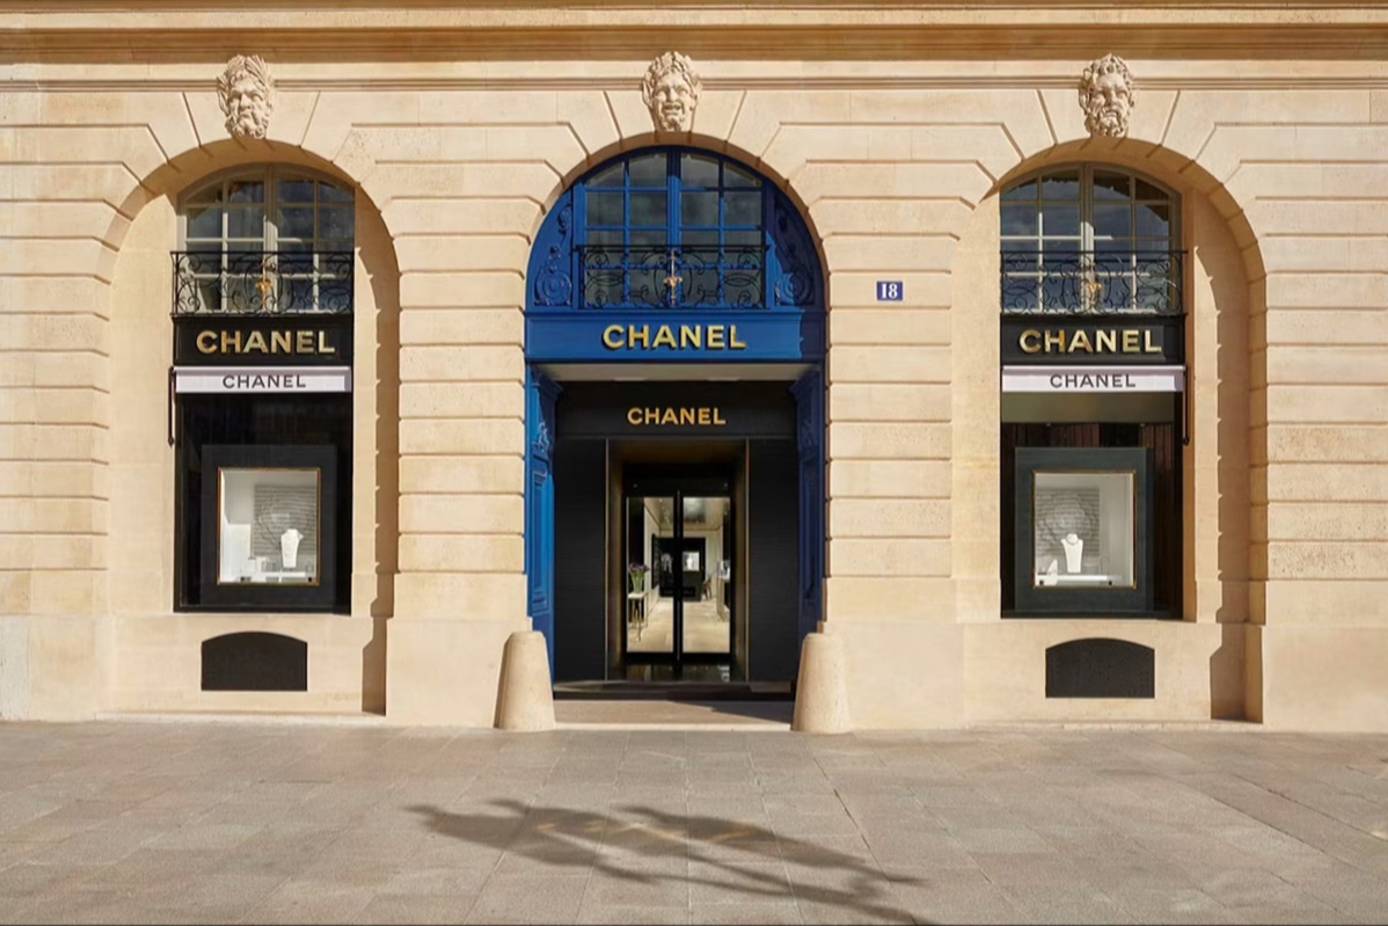 Chanel: brand value worldwide 2017-2022